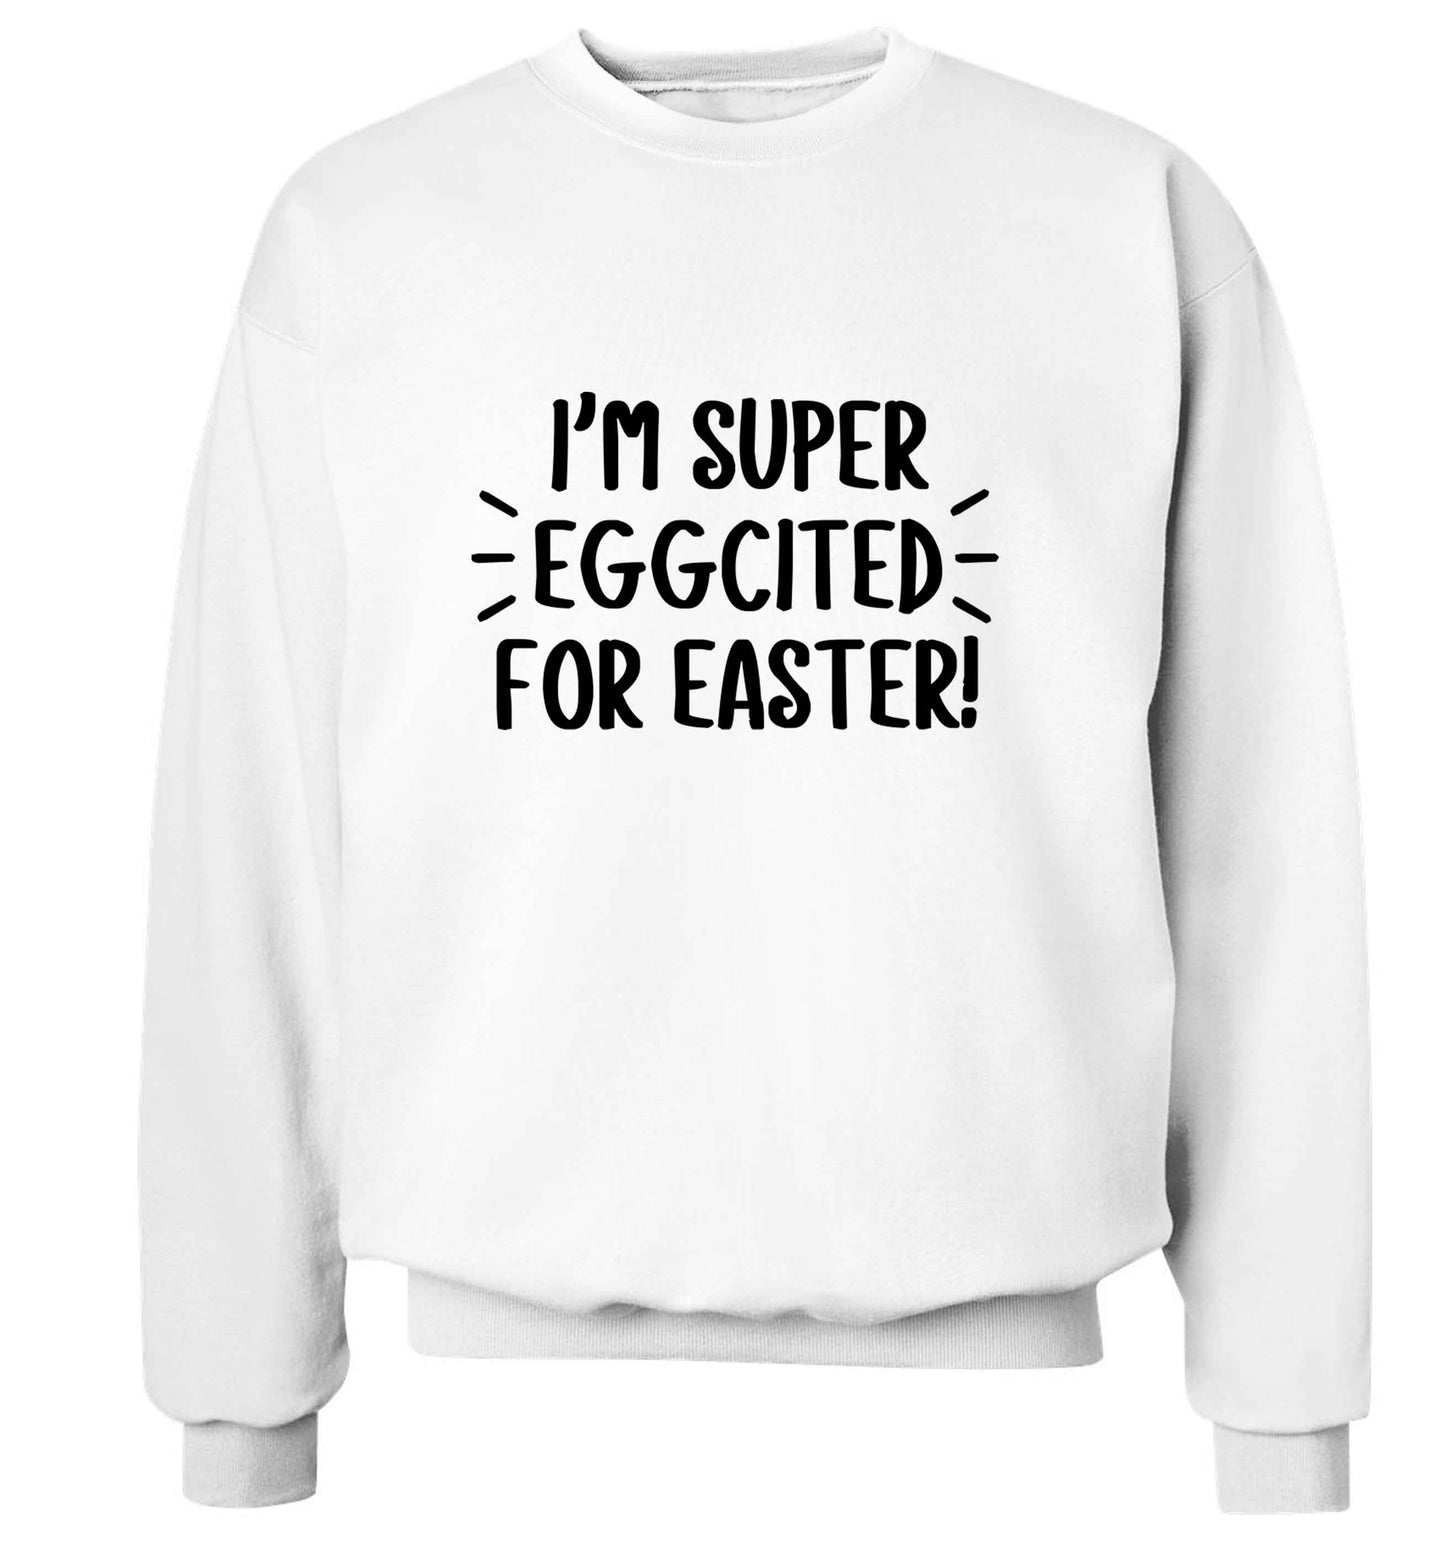 I'm super eggcited for Easter adult's unisex white sweater 2XL